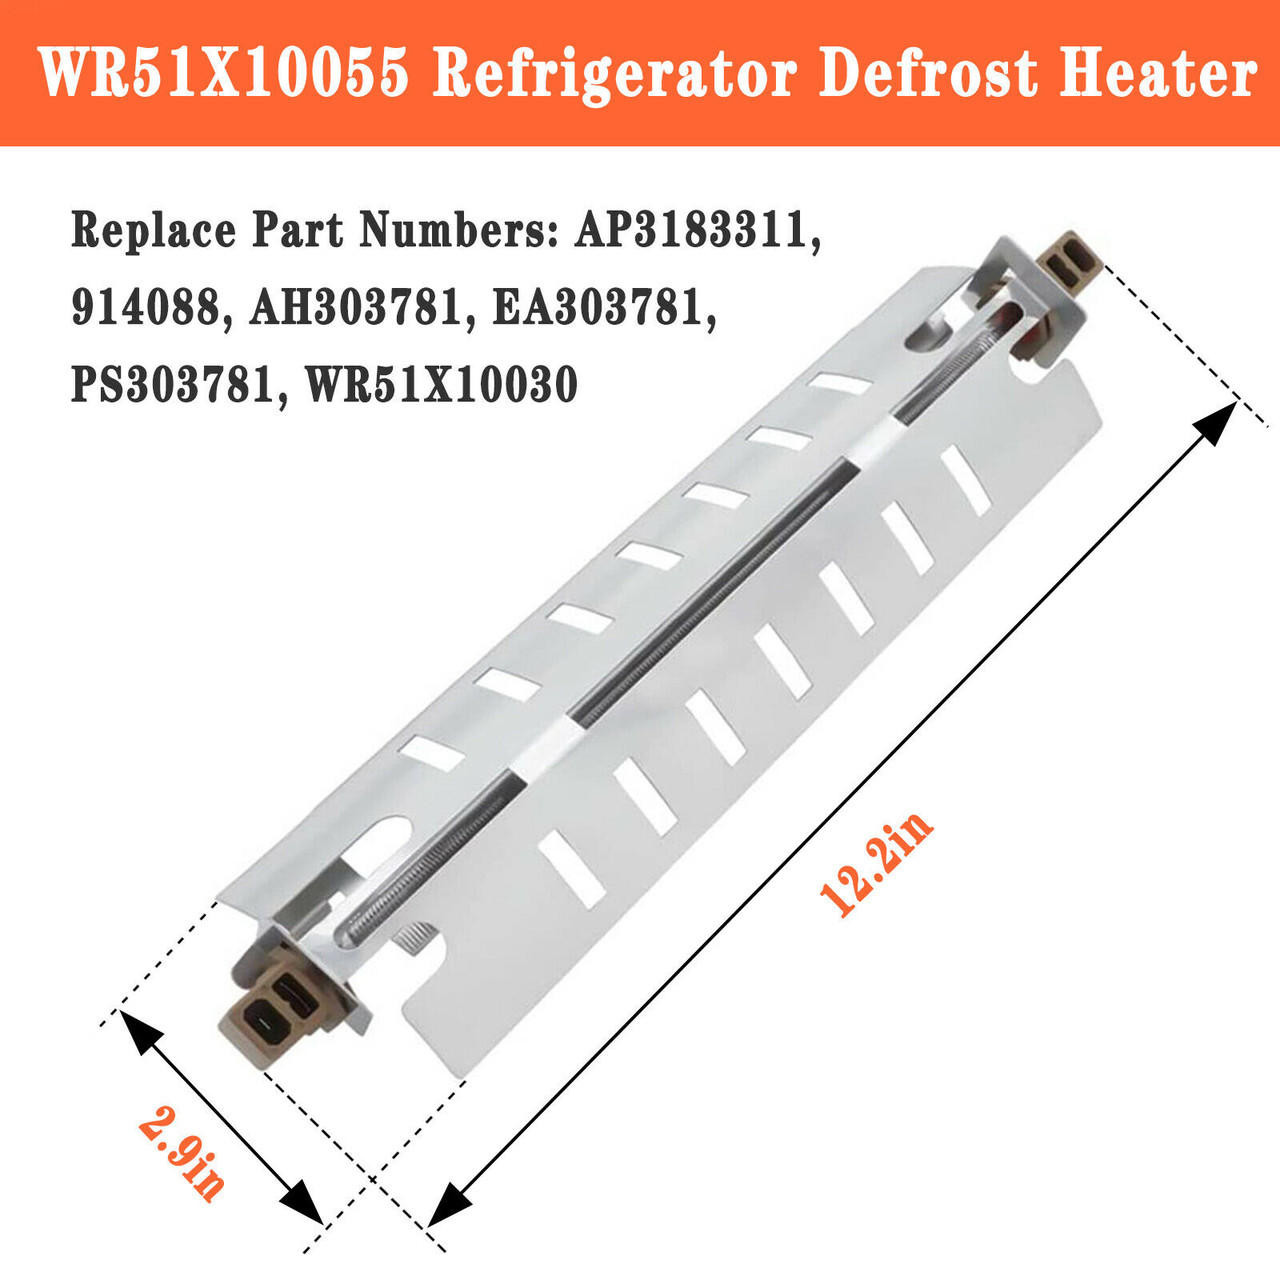 WR51X10055 Refrigerator Defrost Heater - BlueStarsParts